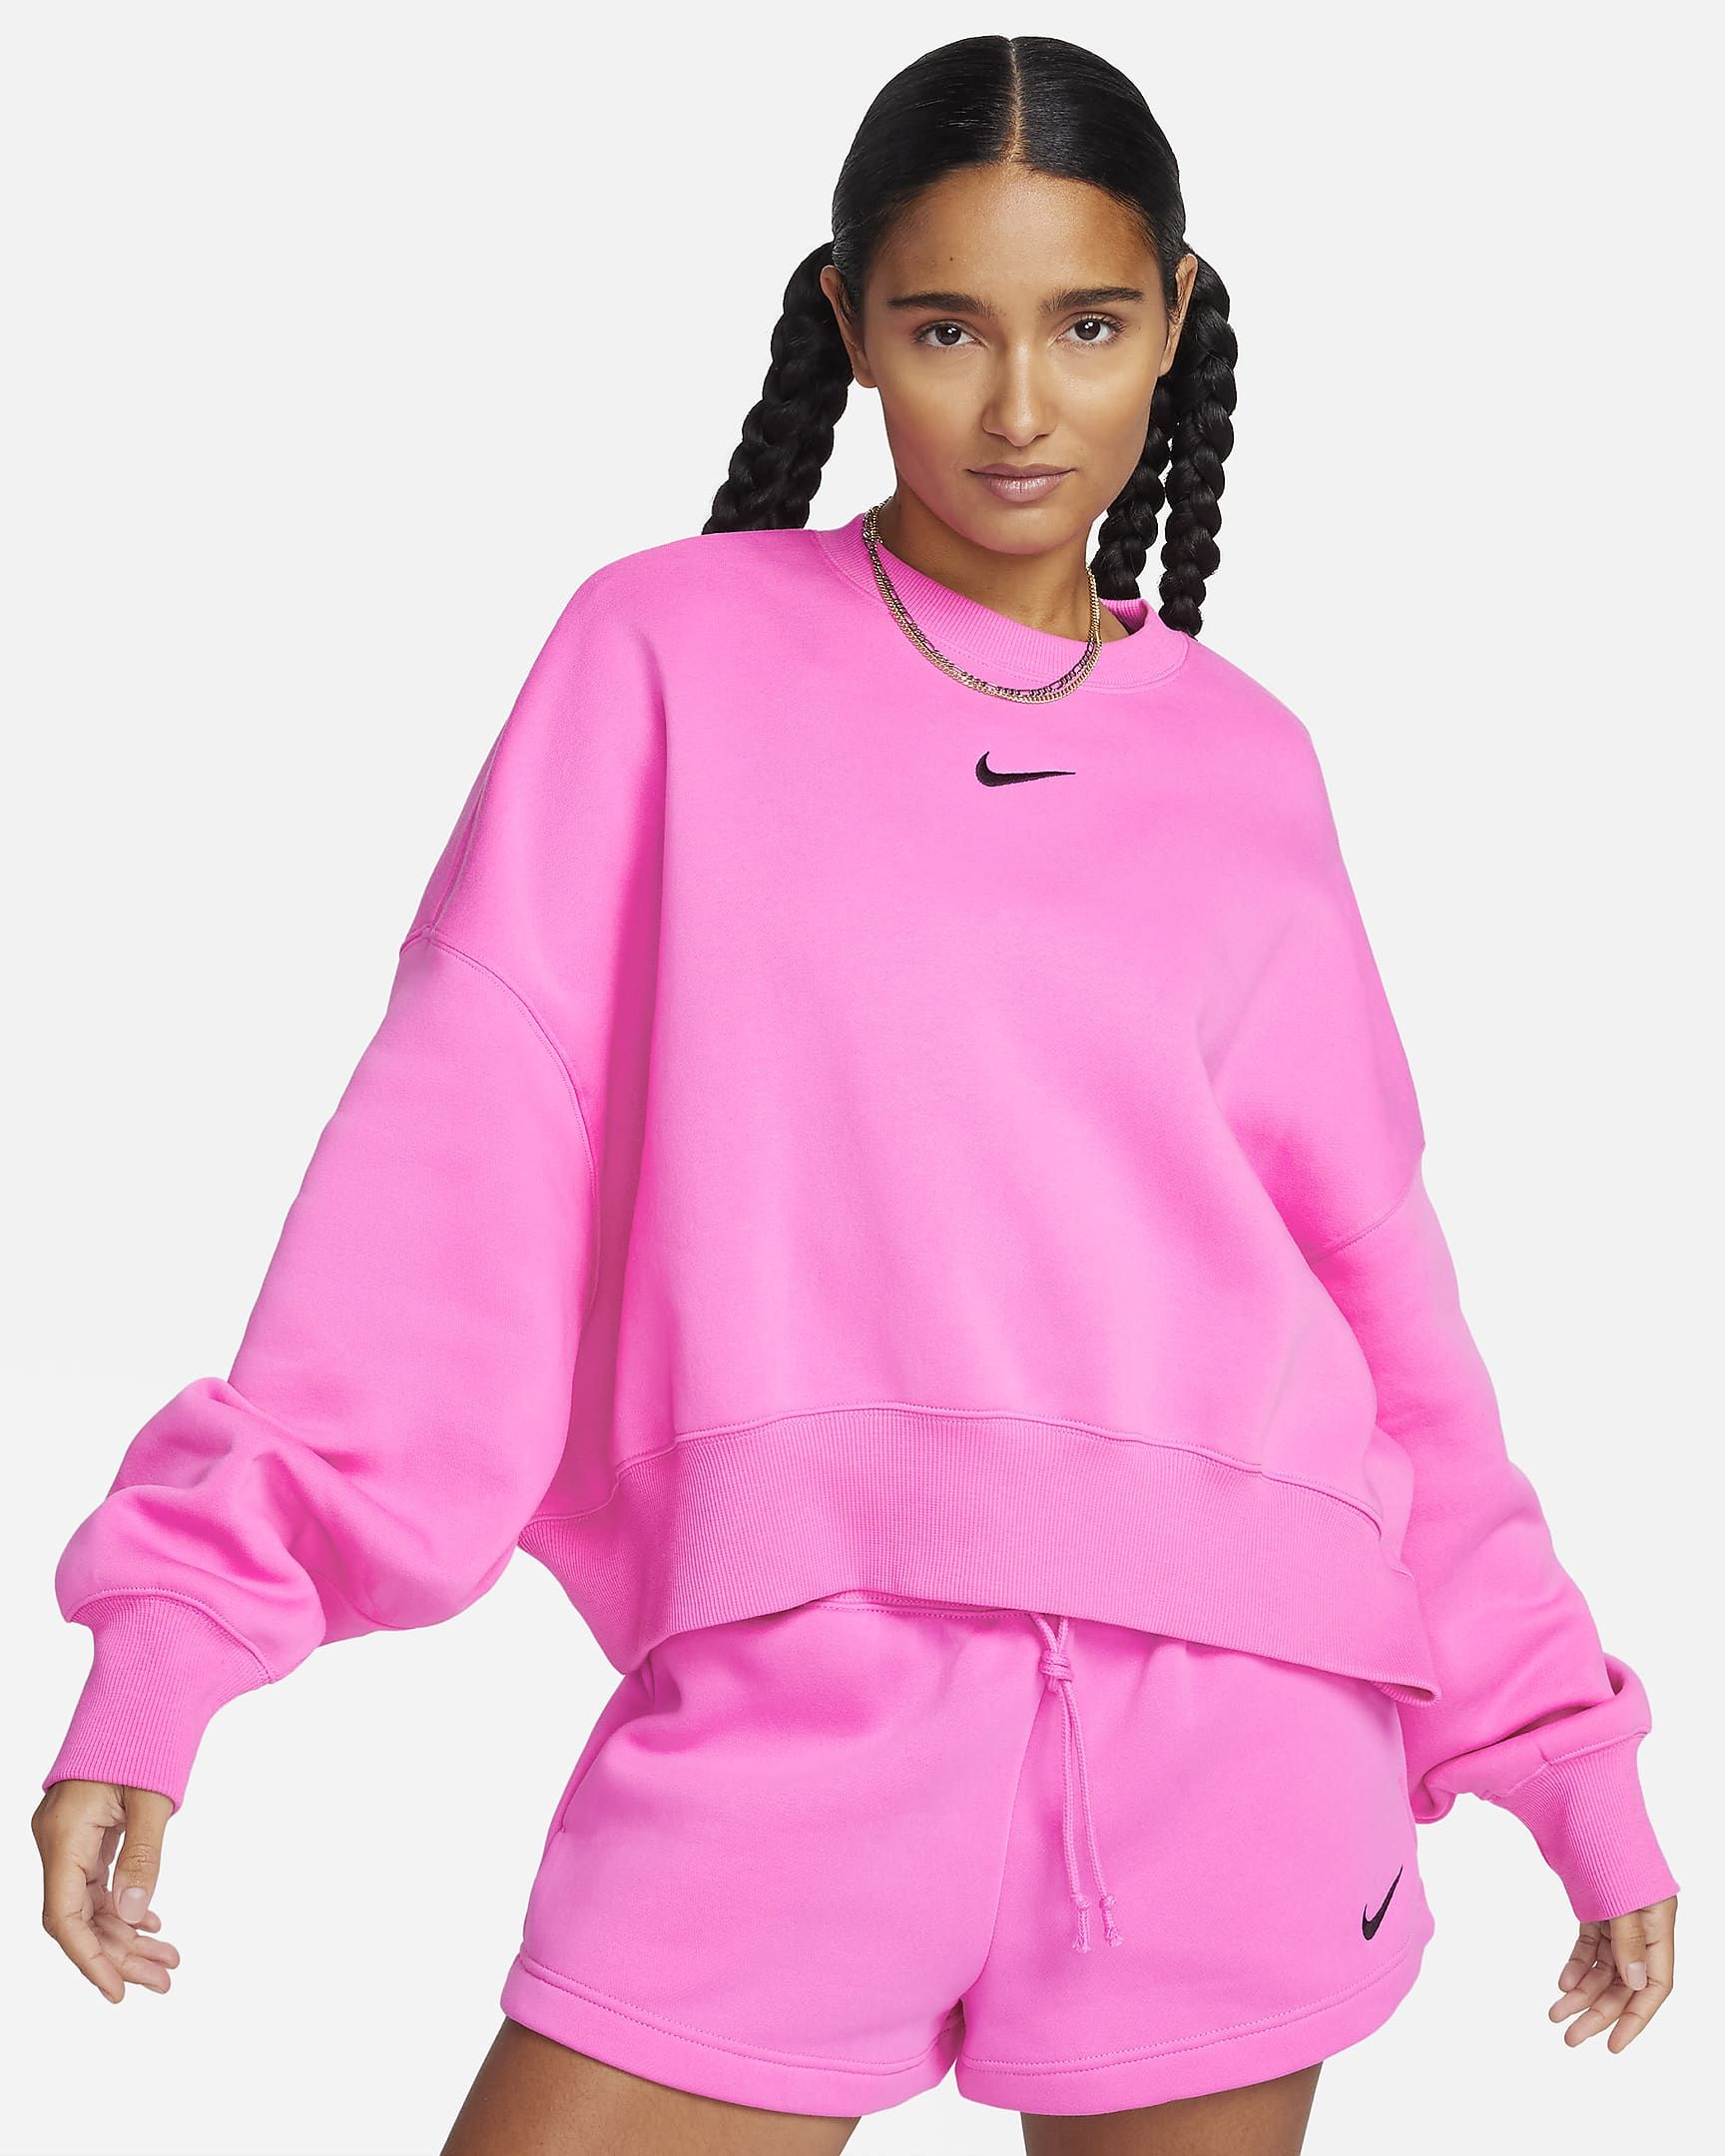 Nike Sportswear Phoenix FleeceWomen's Over-Oversized Crew-Neck Sweatshirt$70 | Nike (US)